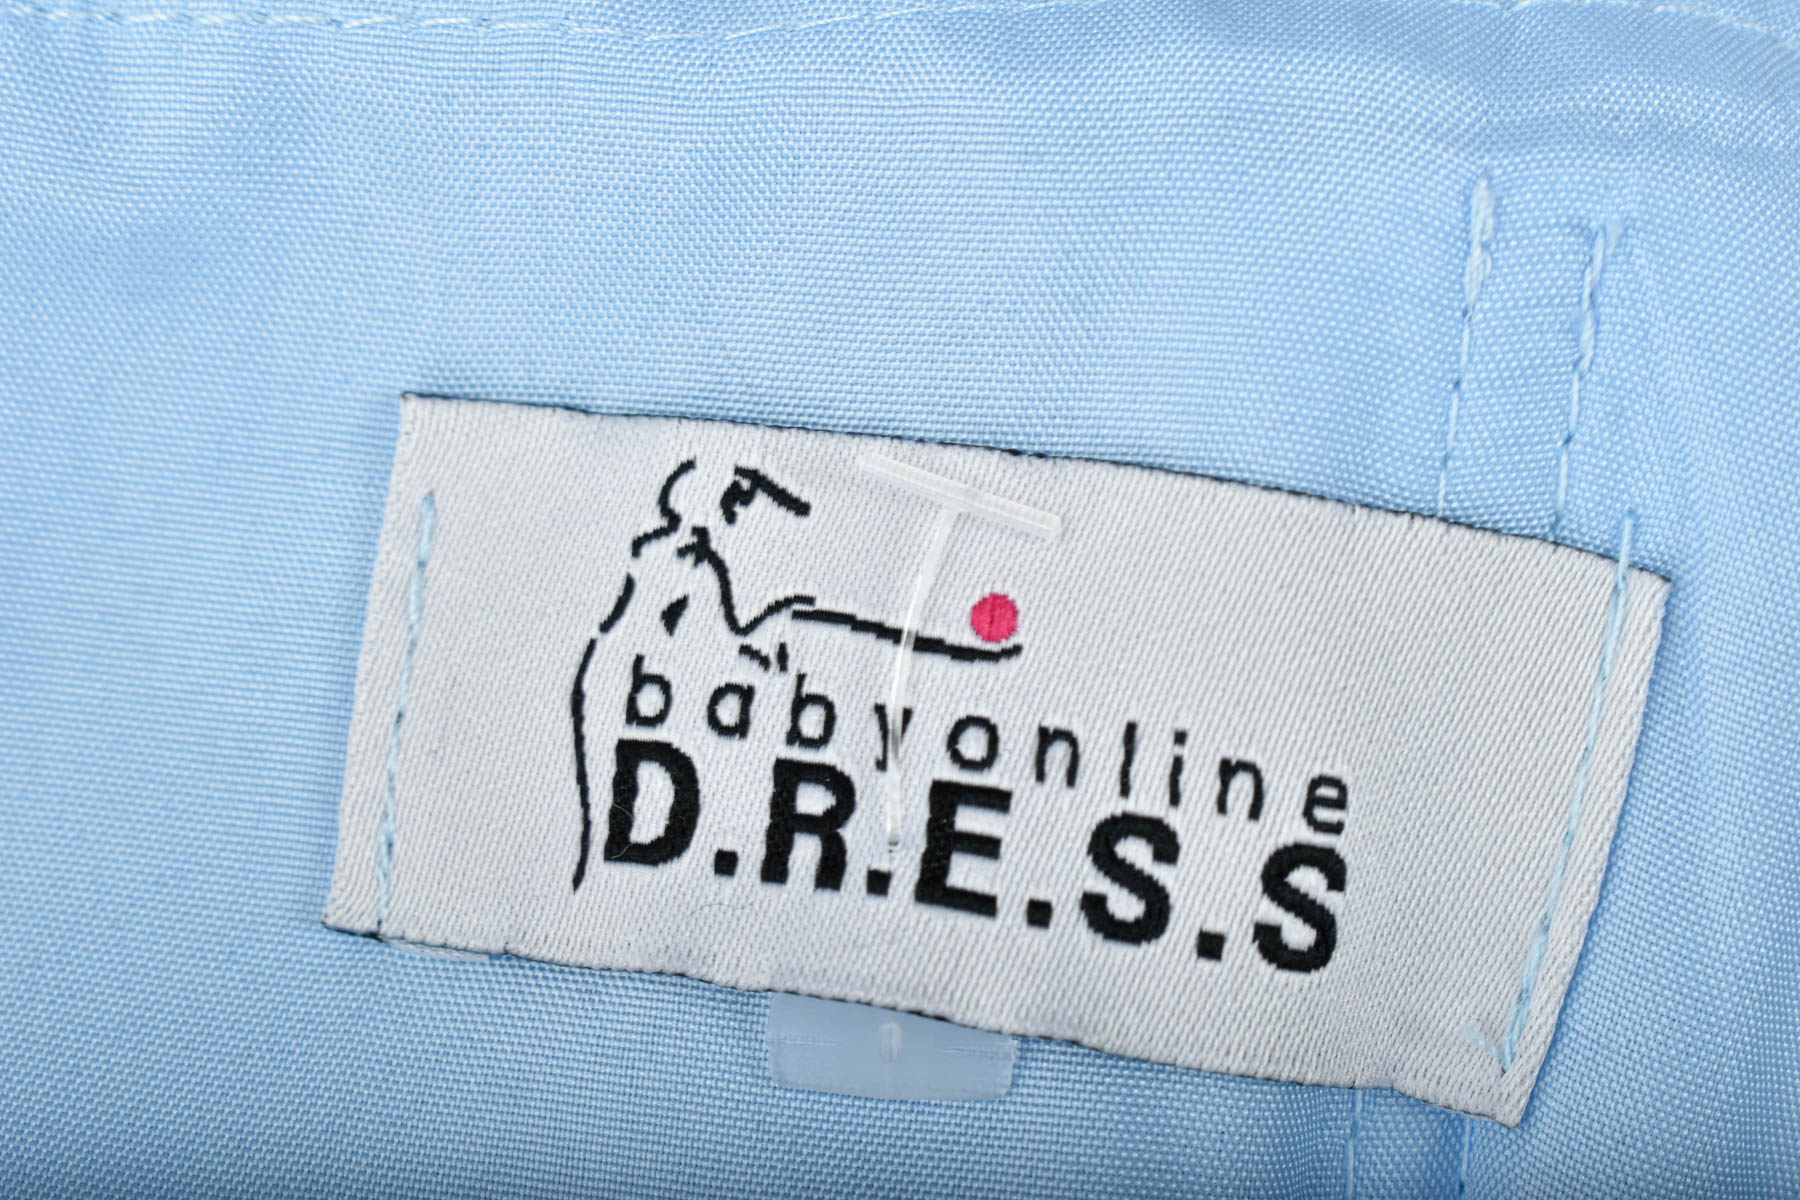 Dress - Babyonline DRESS - 2